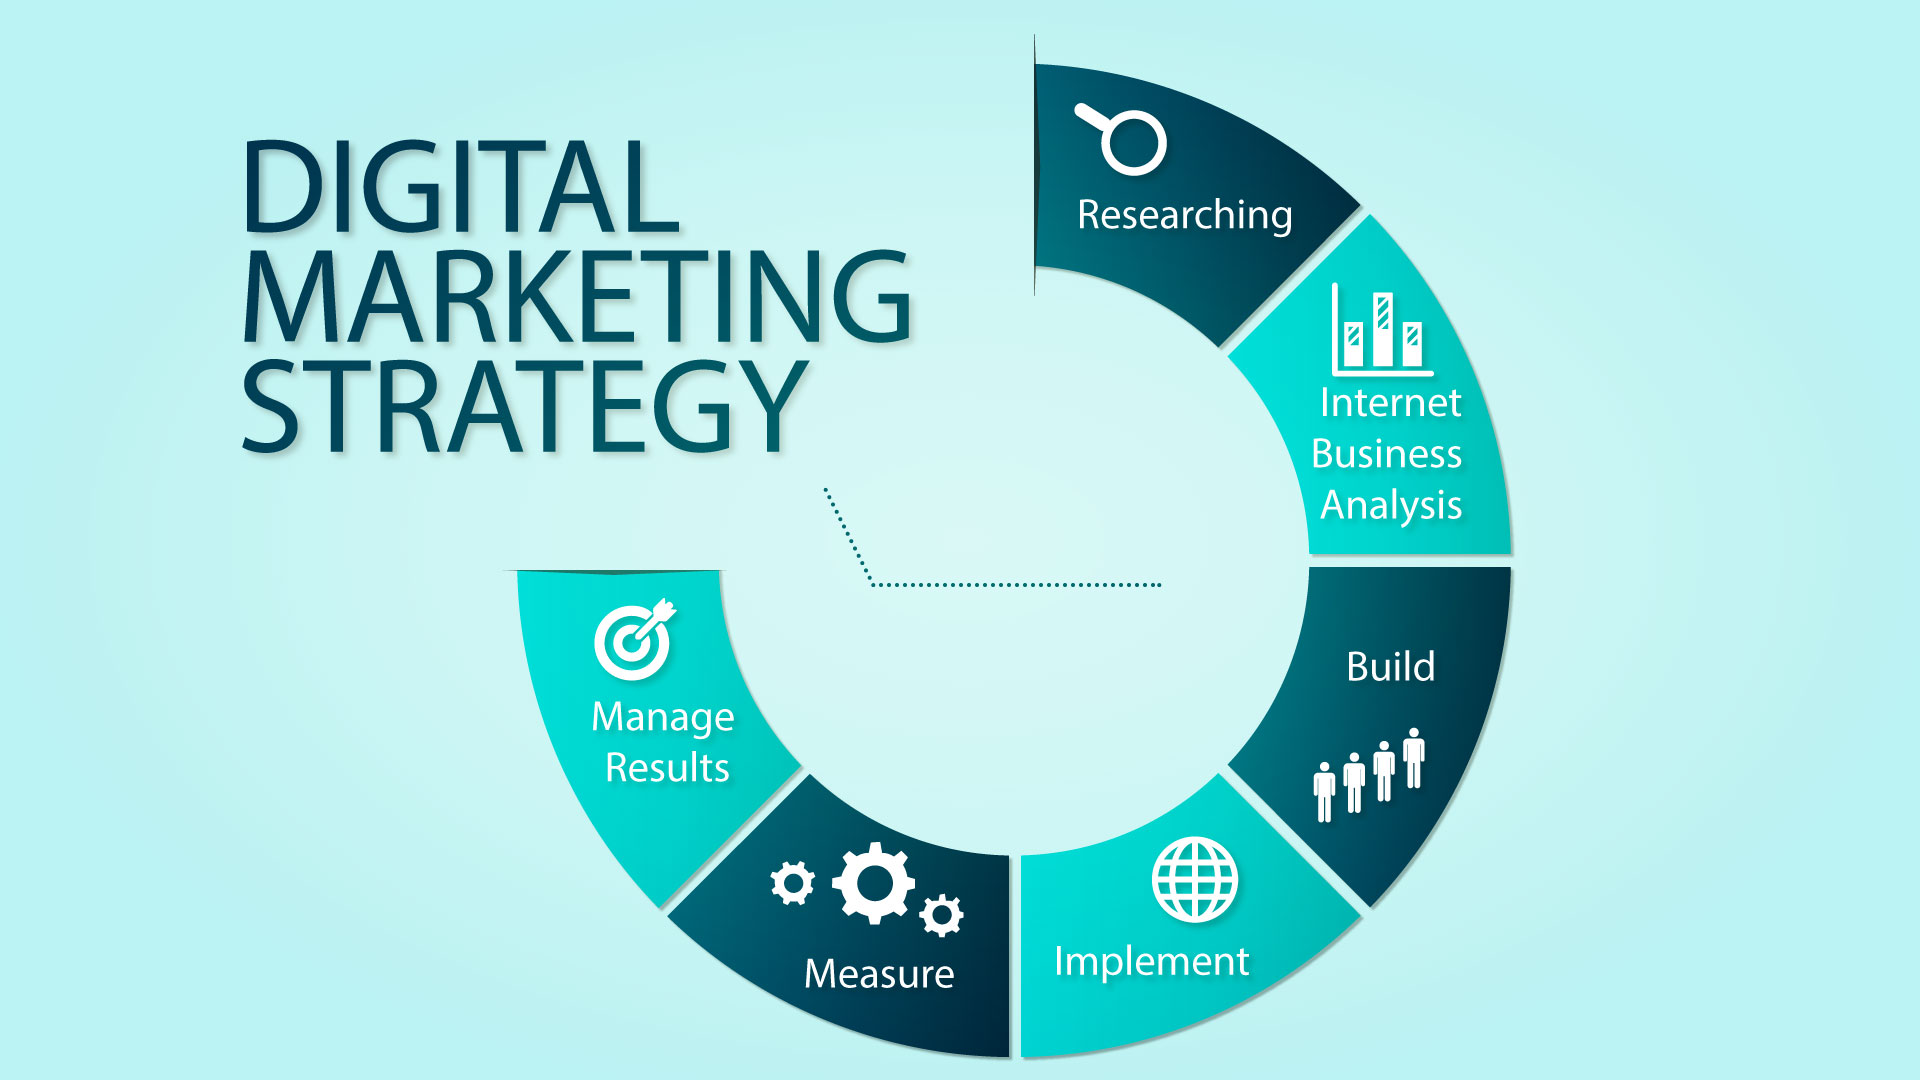 How to Create a Digital Marketing Strategy